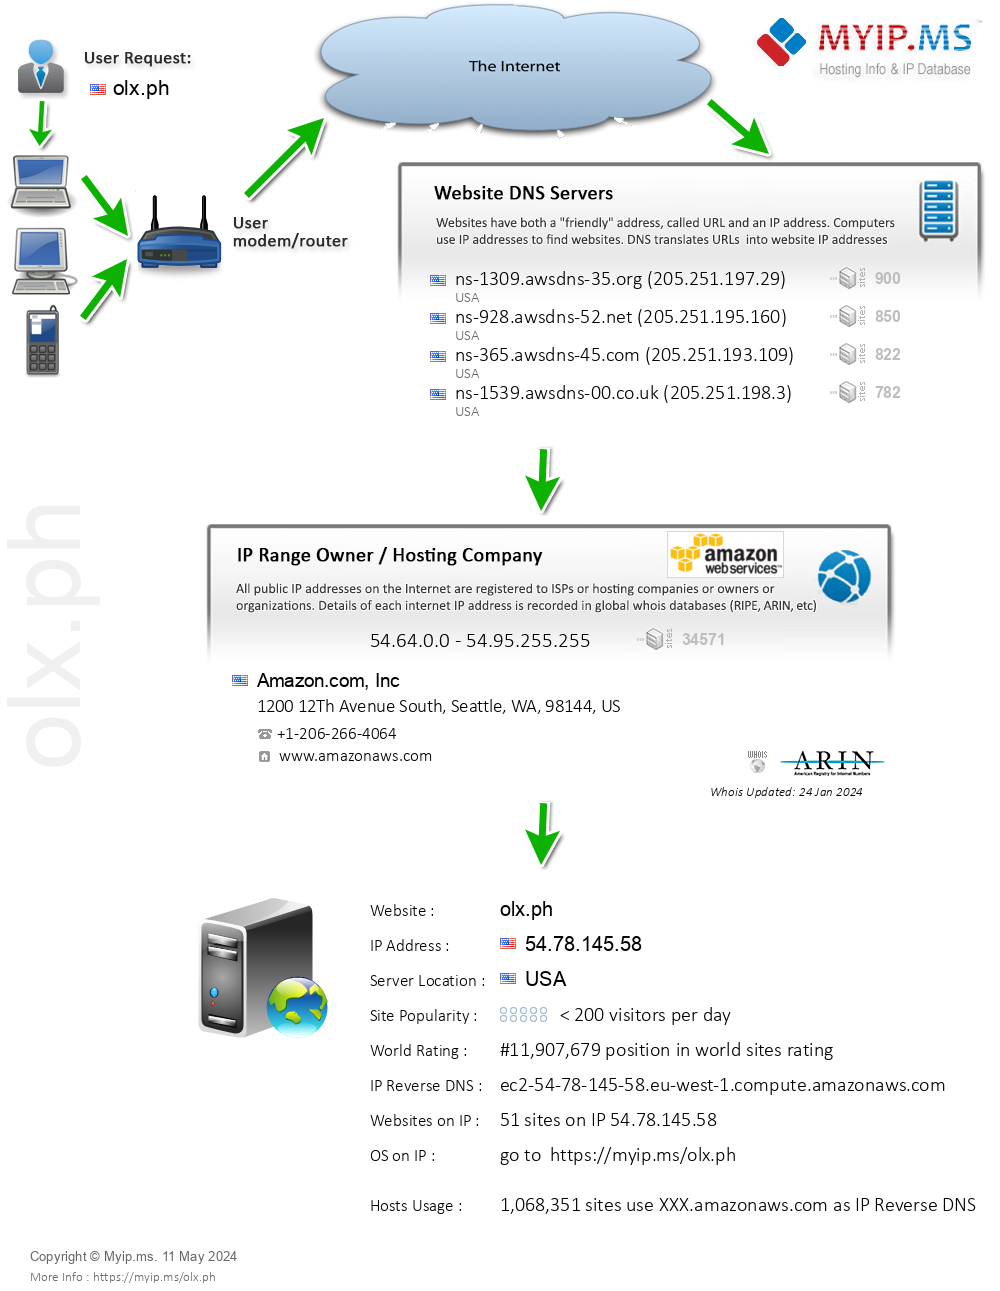 Olx.ph - Website Hosting Visual IP Diagram